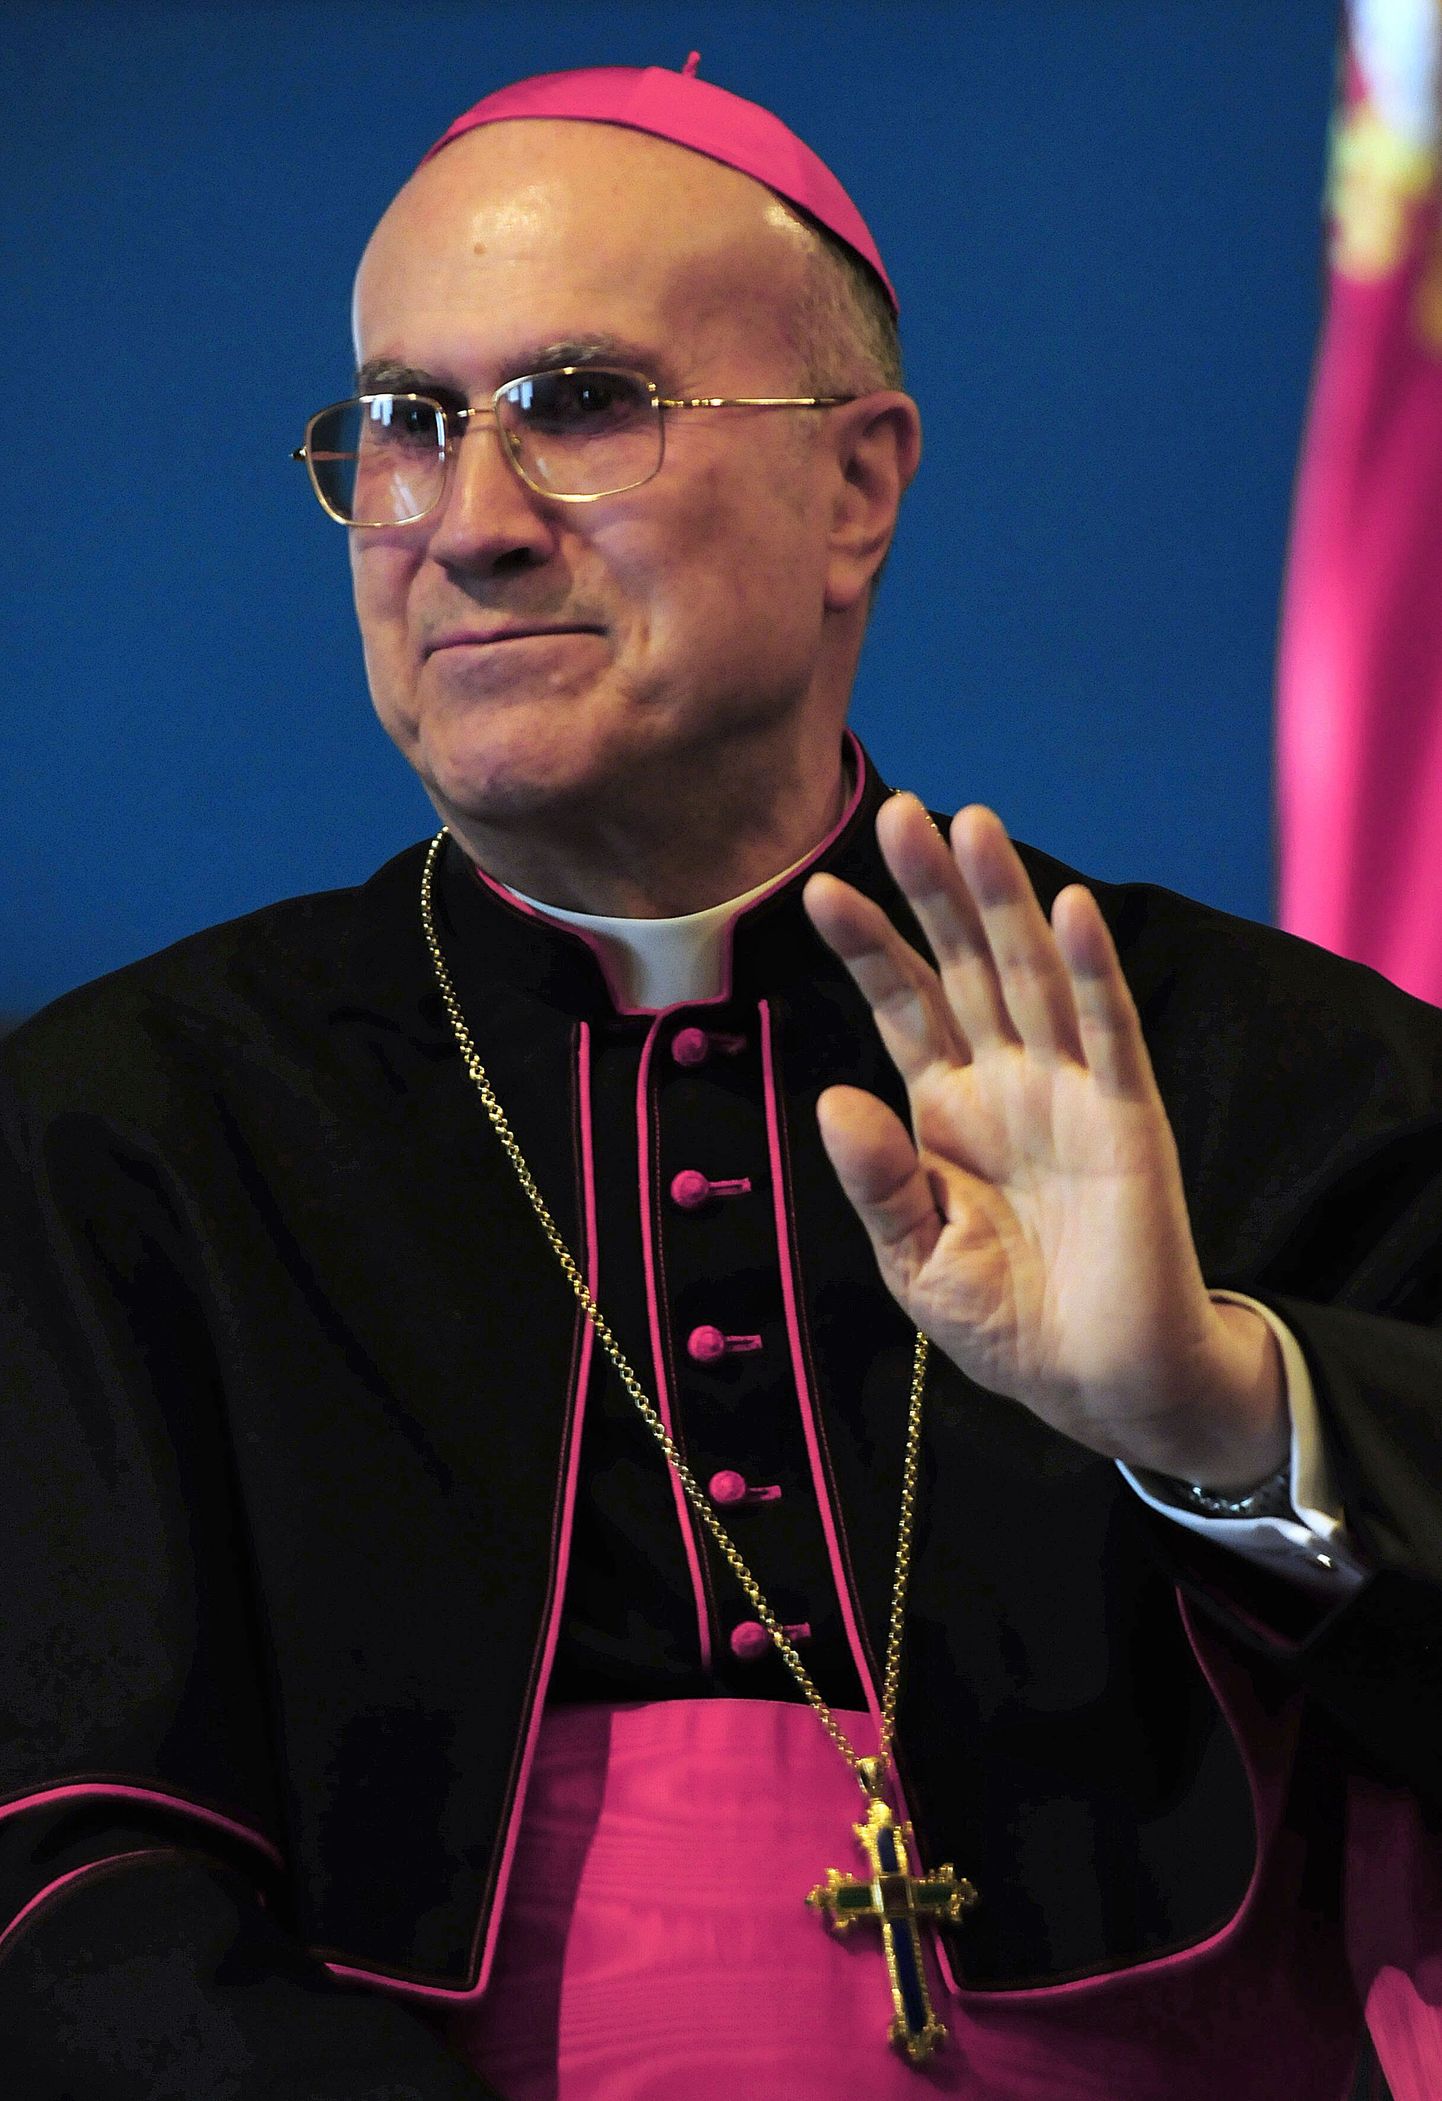 Vatikani välisminister Tarcisio Bertone